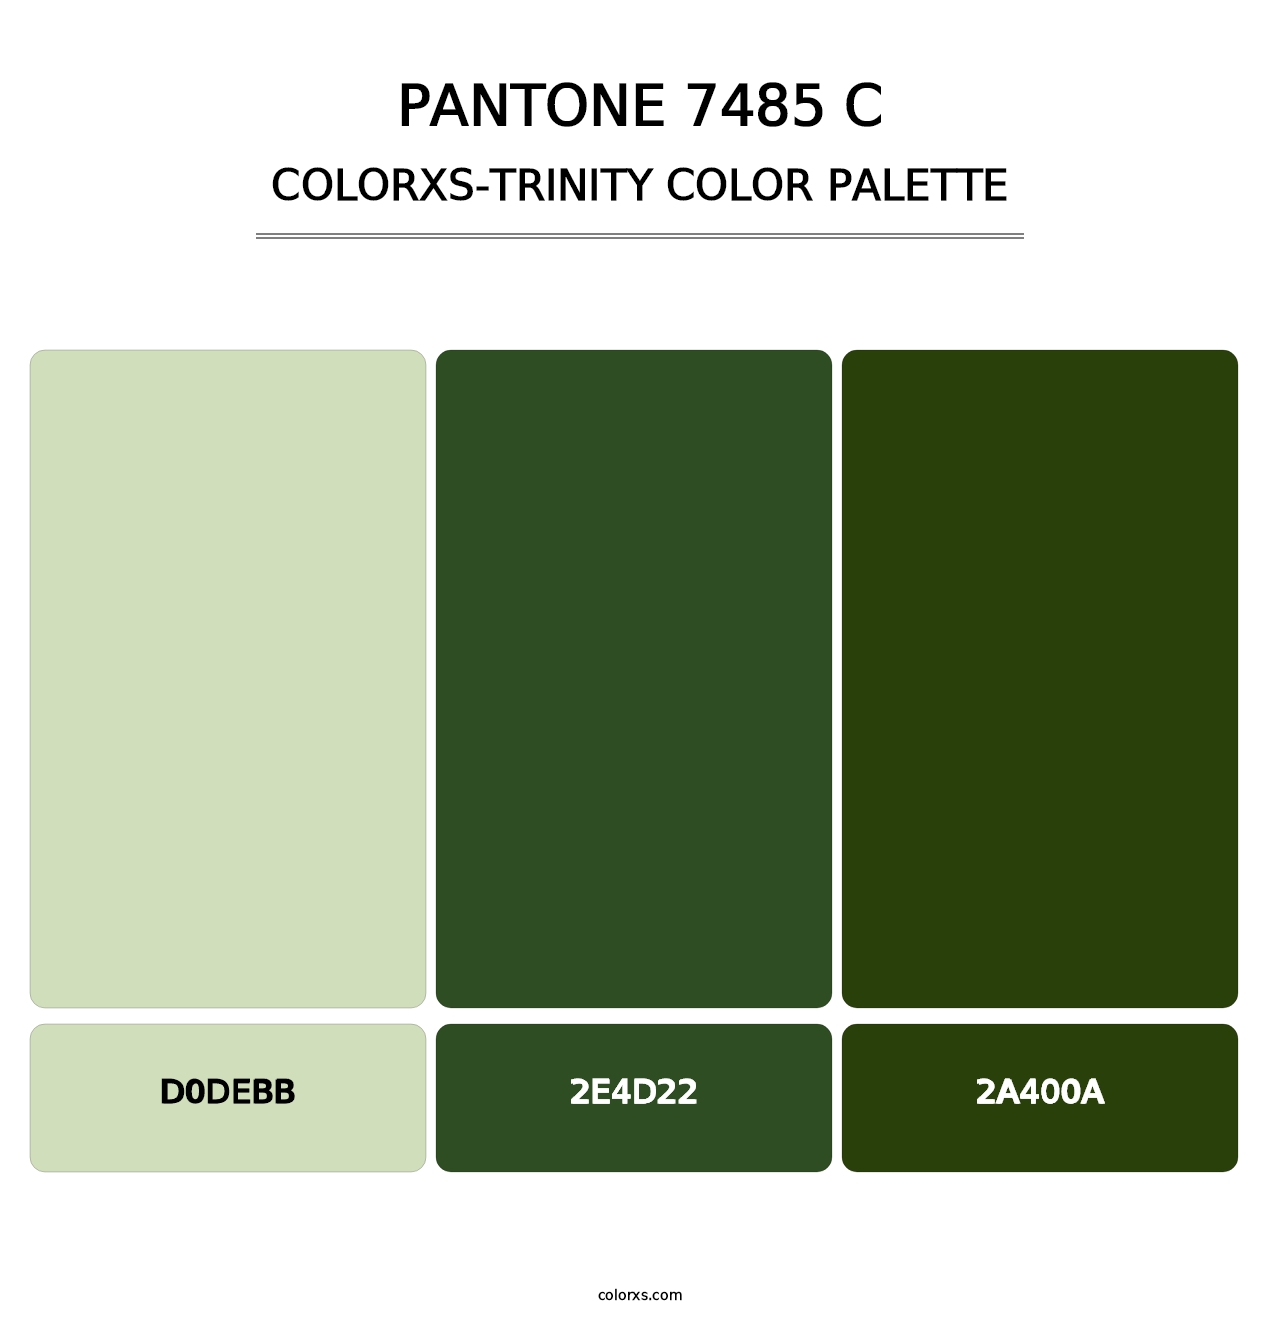 PANTONE 7485 C - Colorxs Trinity Palette